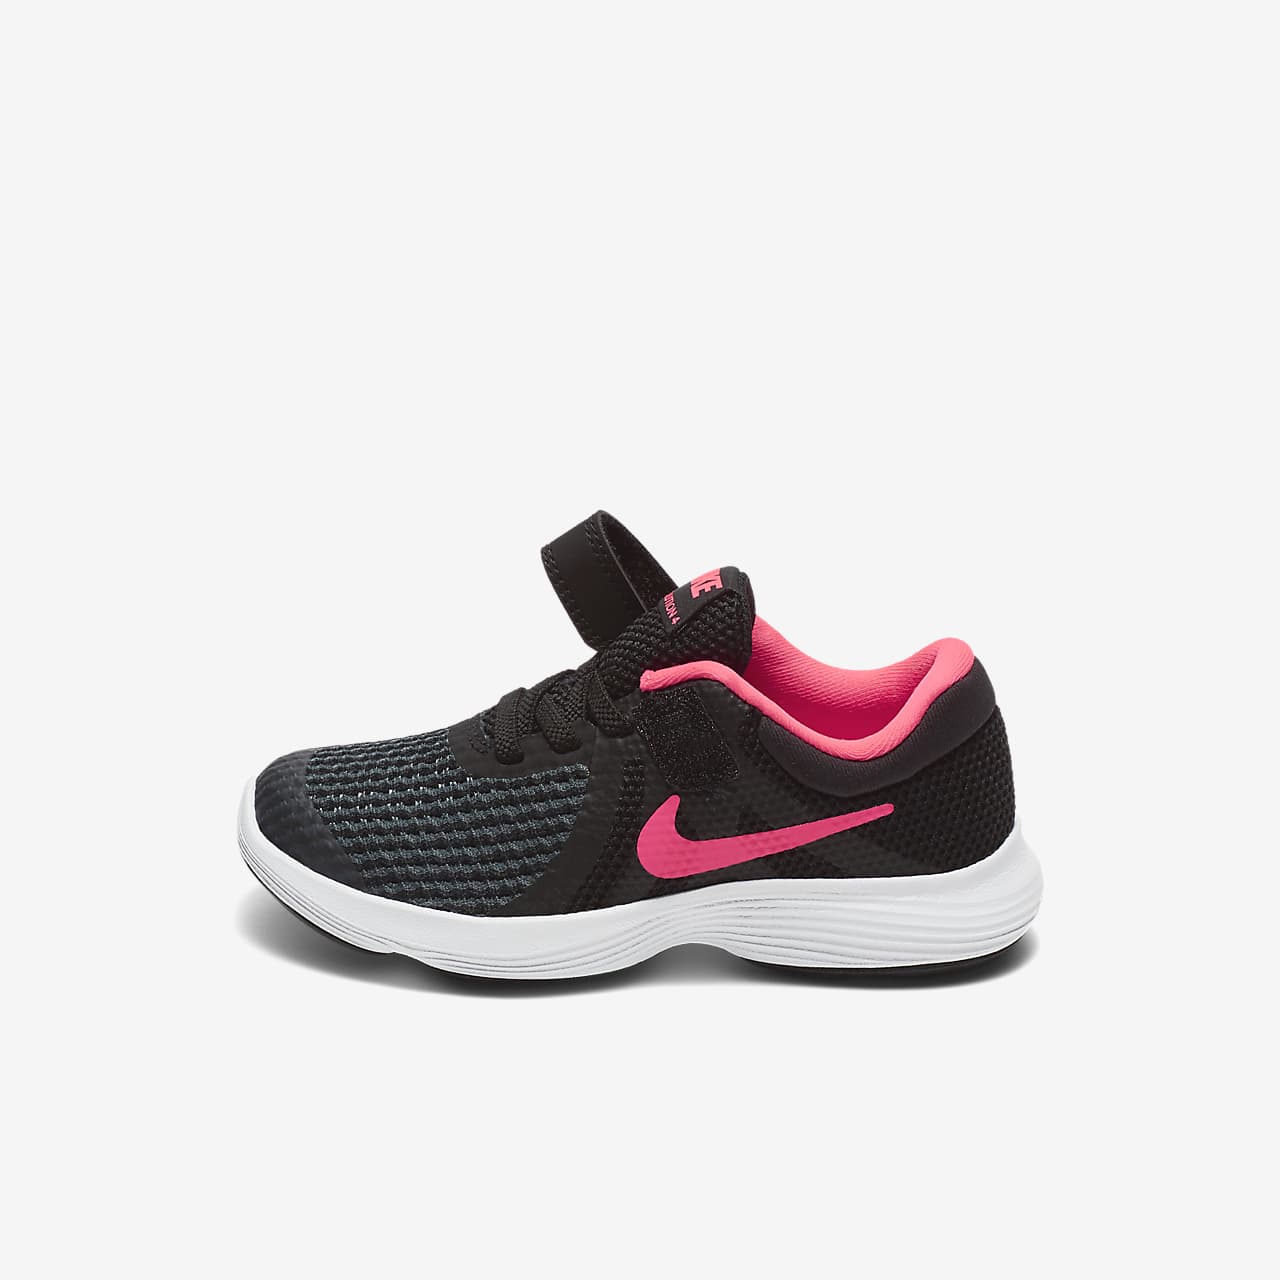 Okkernoot Regan bijwoord Nike Revolution 4 Grey Pink Hotsell, SAVE 38% - mpgc.net